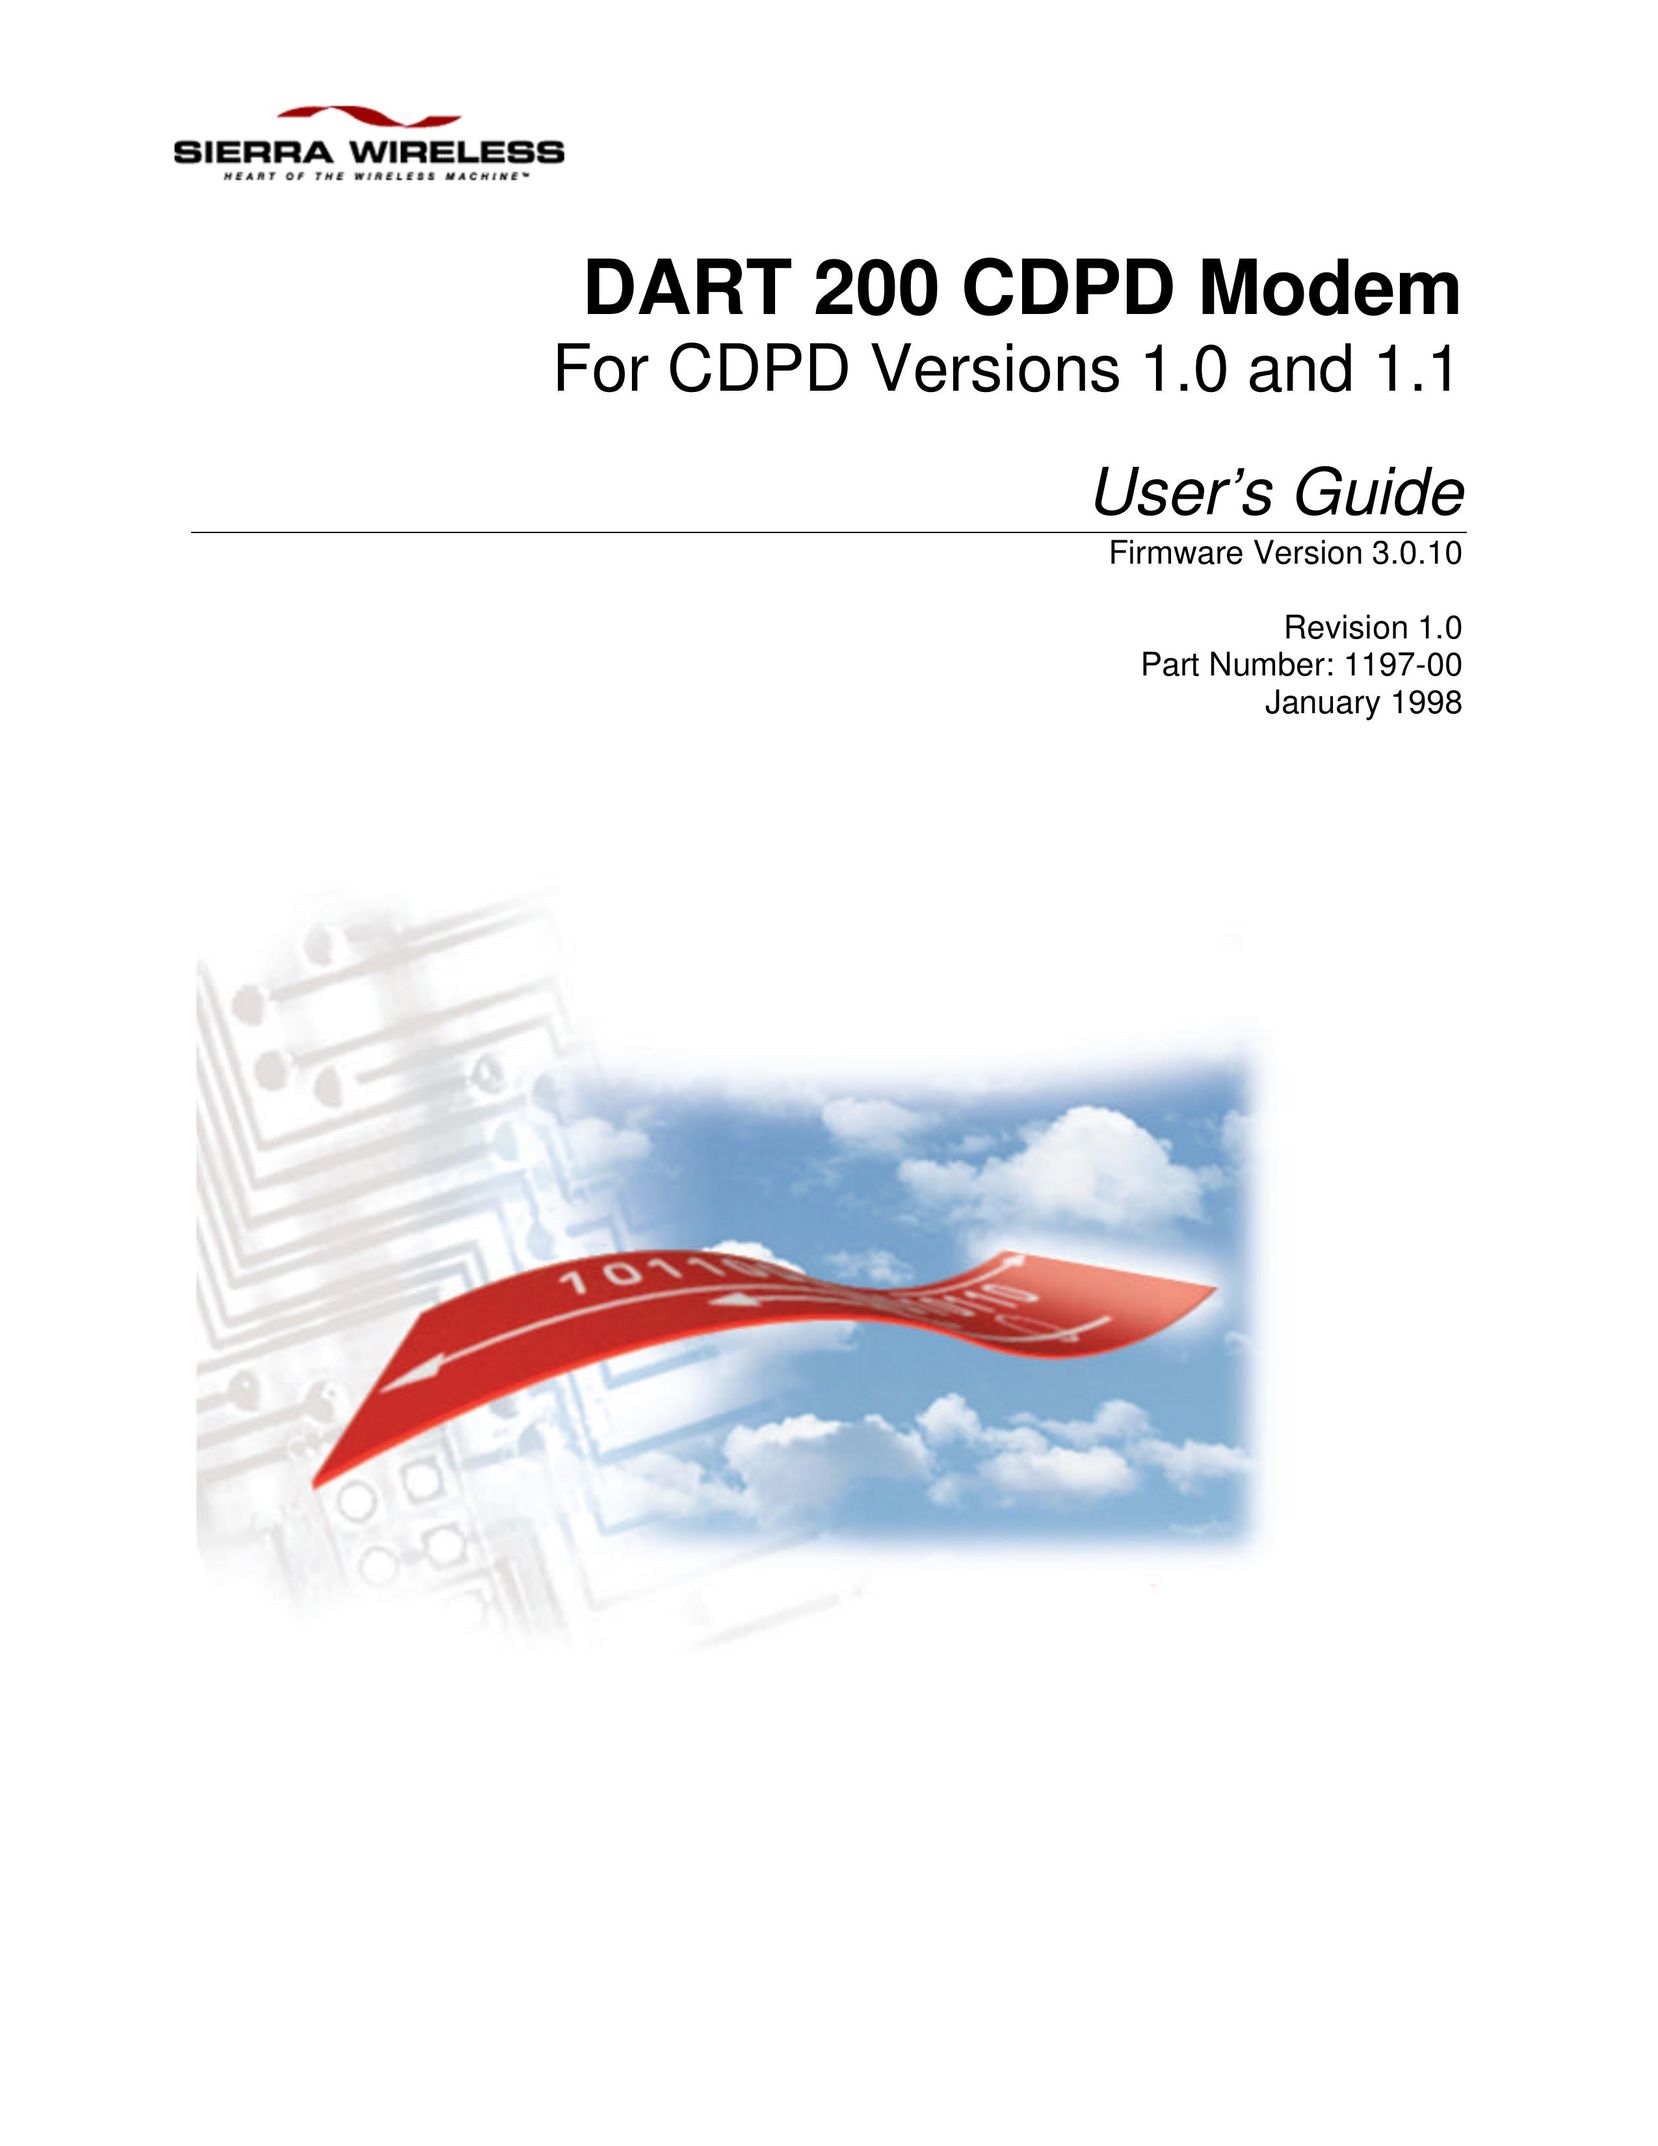 Sierra Wireless DART 200 CDPD Modem Network Card User Manual